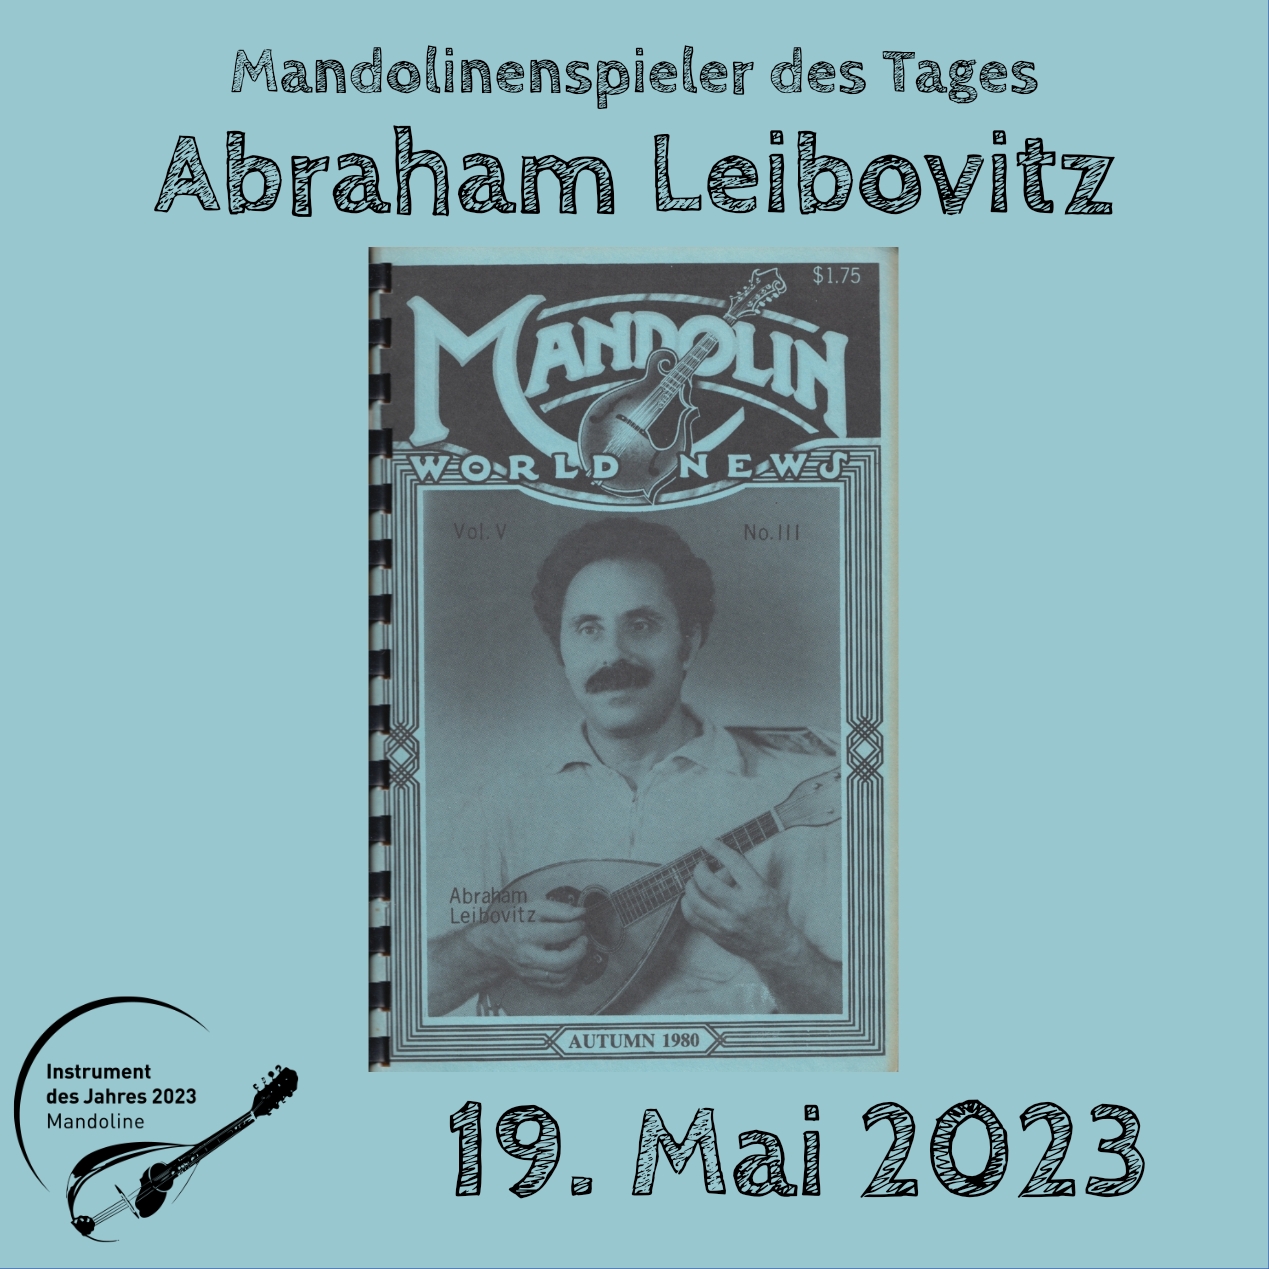 Abraham Leibovitz Mandoline Instrument des Jahres 2023 Mandolinenspieler Mandolinenspielerin des Tages